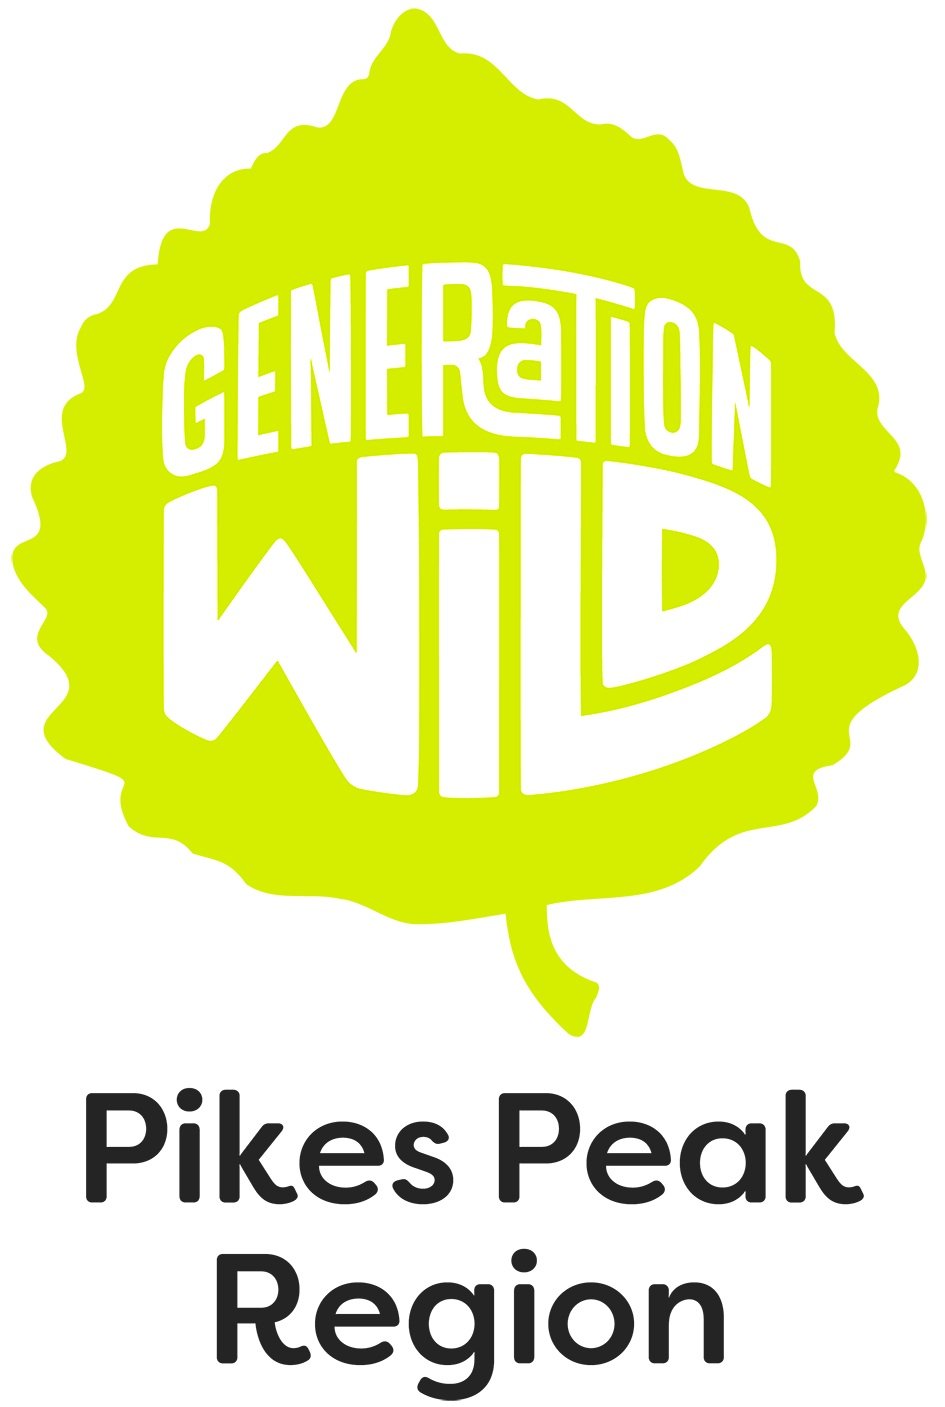 Generation Wild of the Pikes Peak Region